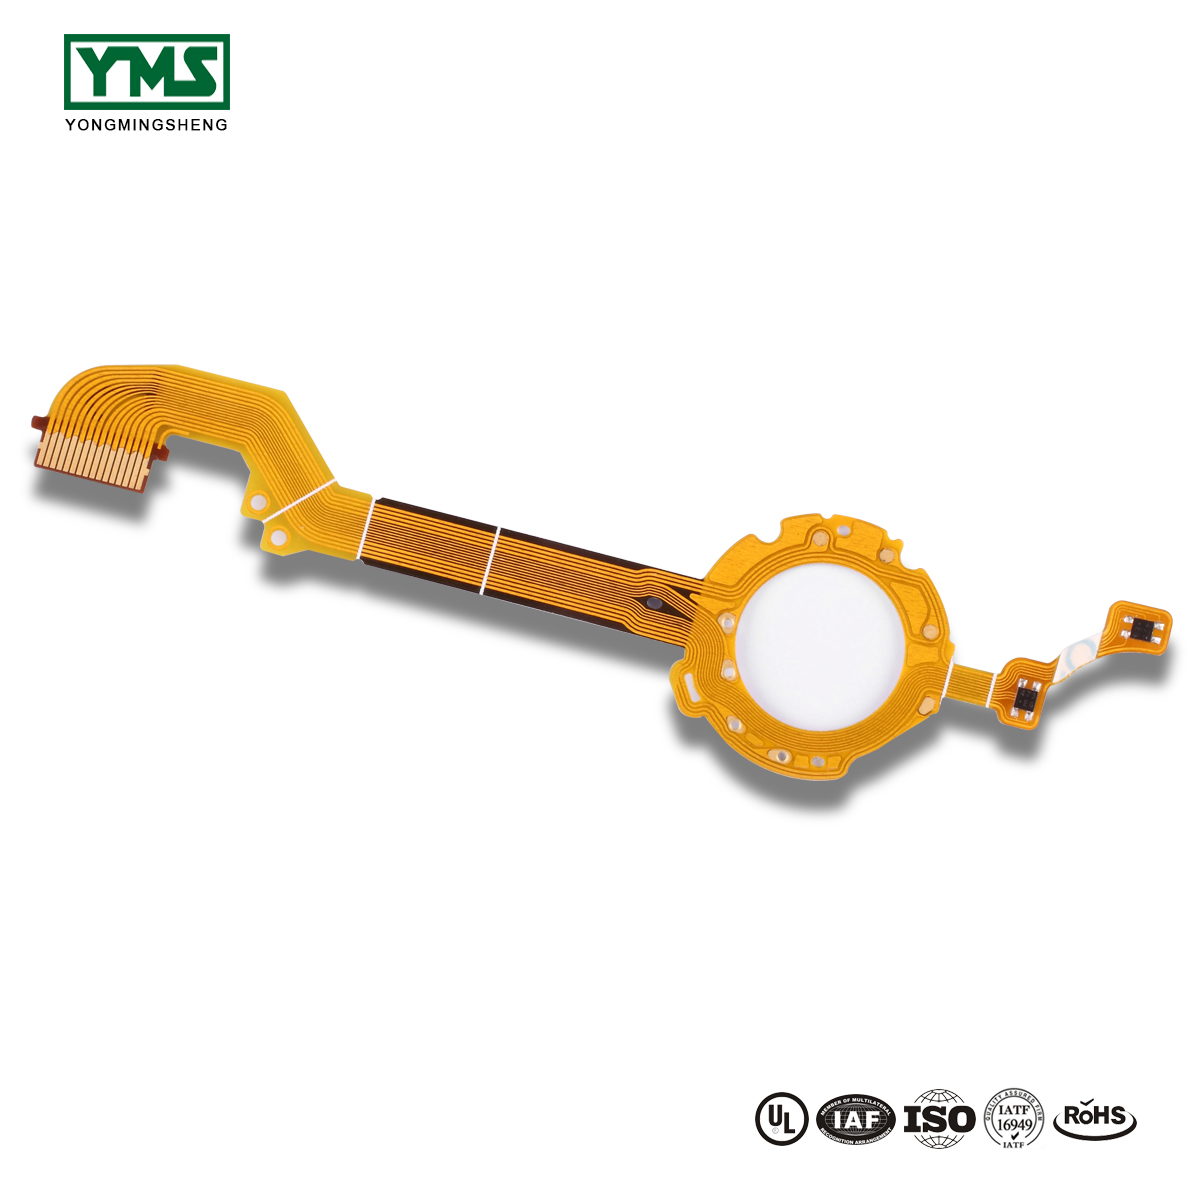 OEM manufacturer Hard Gold Pcb - 2Layer Flexible Board | YMSPCB – Yongmingsheng